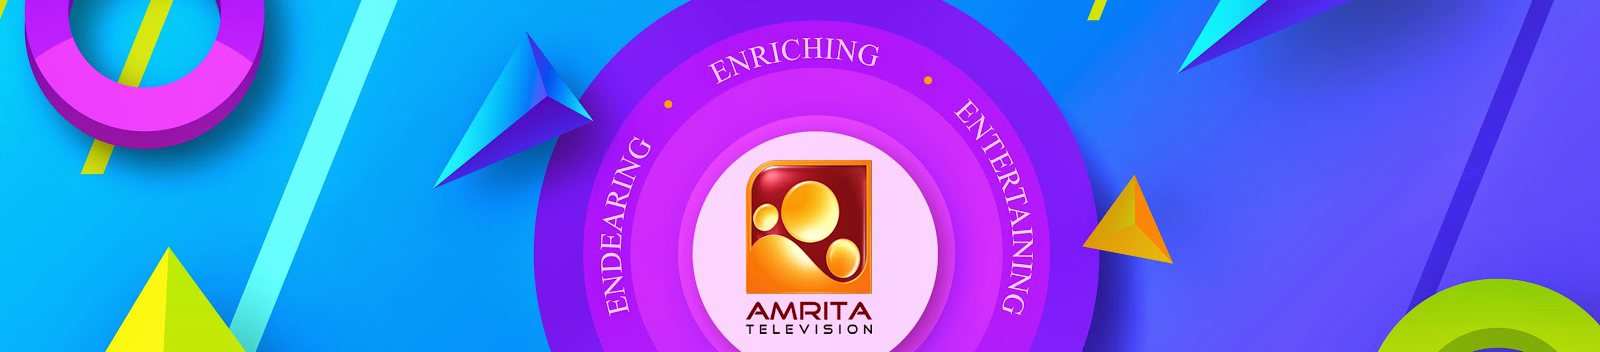 amrita tv banner